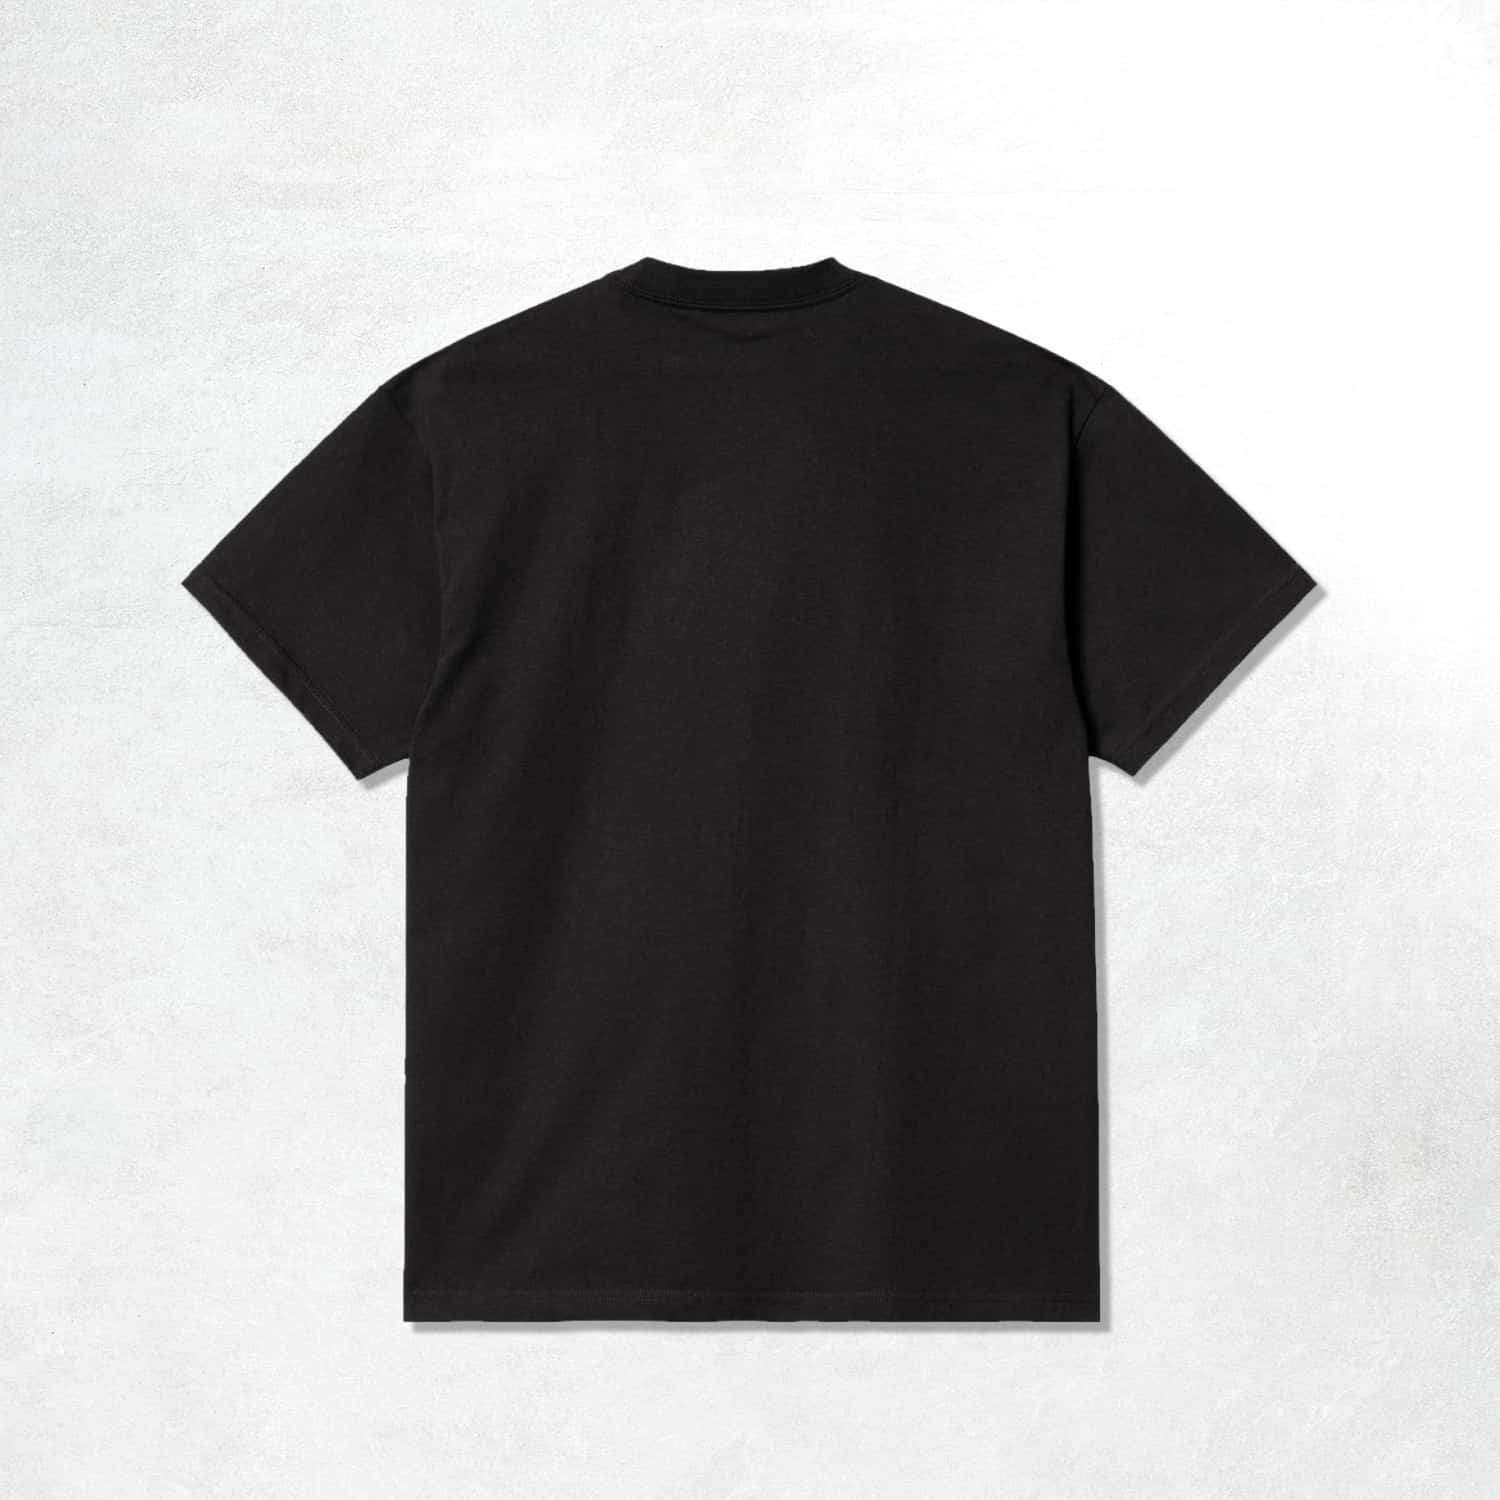 Carhartt WIP S/S Pills T-Shirt: Black (Back)